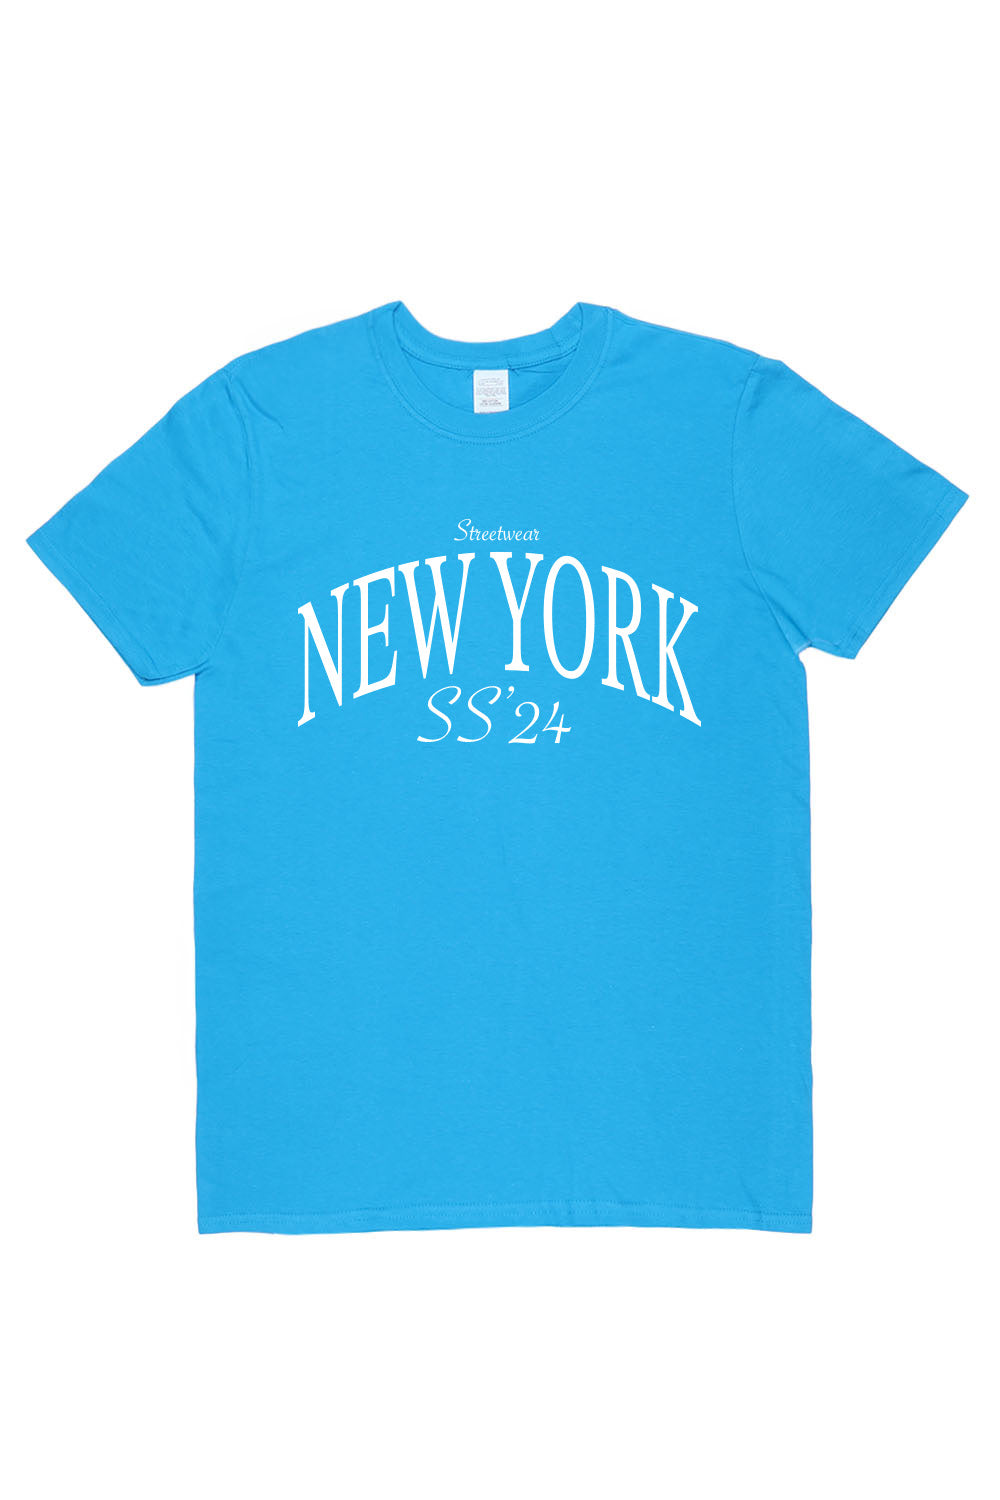 New York T-Shirt in Sapphire Blue (Custom Packs)